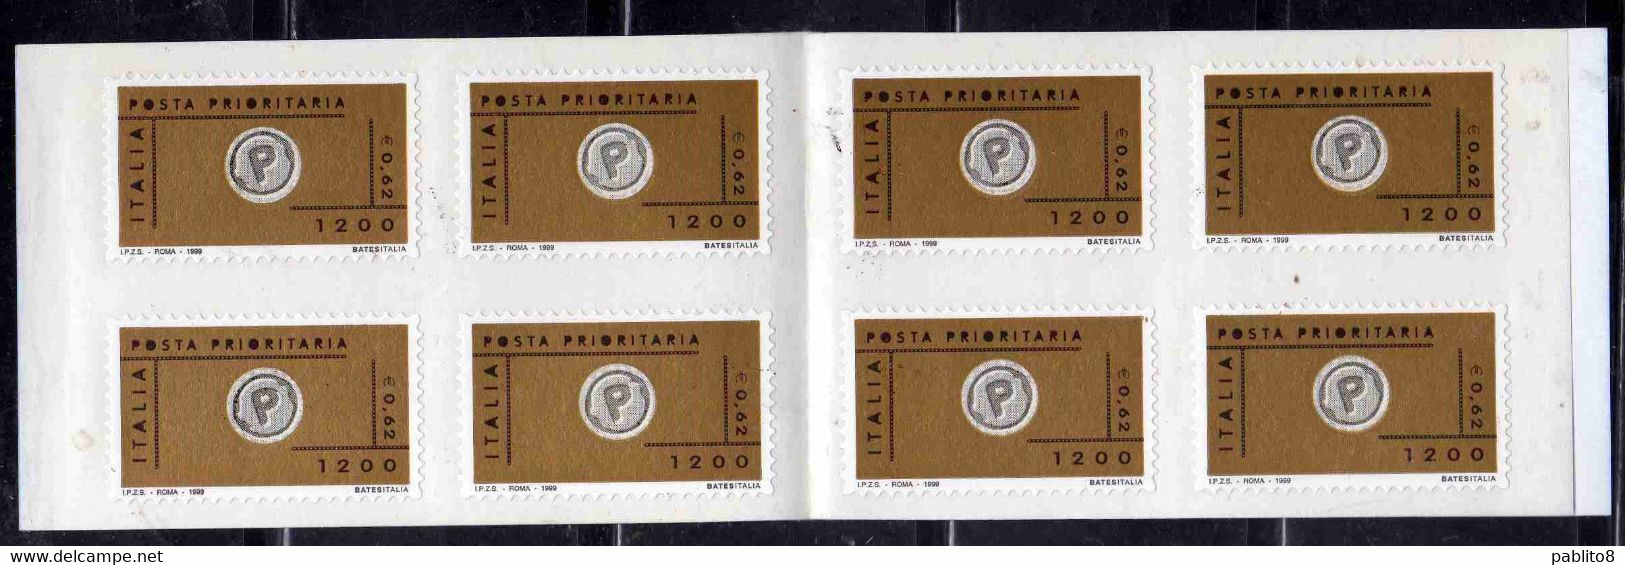 ITALIA REPUBBLICA ITALY REPUBLIC 1999 POSTA PRIORITARIA LIBRETTO CON STRISCIA 8 ESEMPLARI BOOKLET MNH - Postzegelboekjes